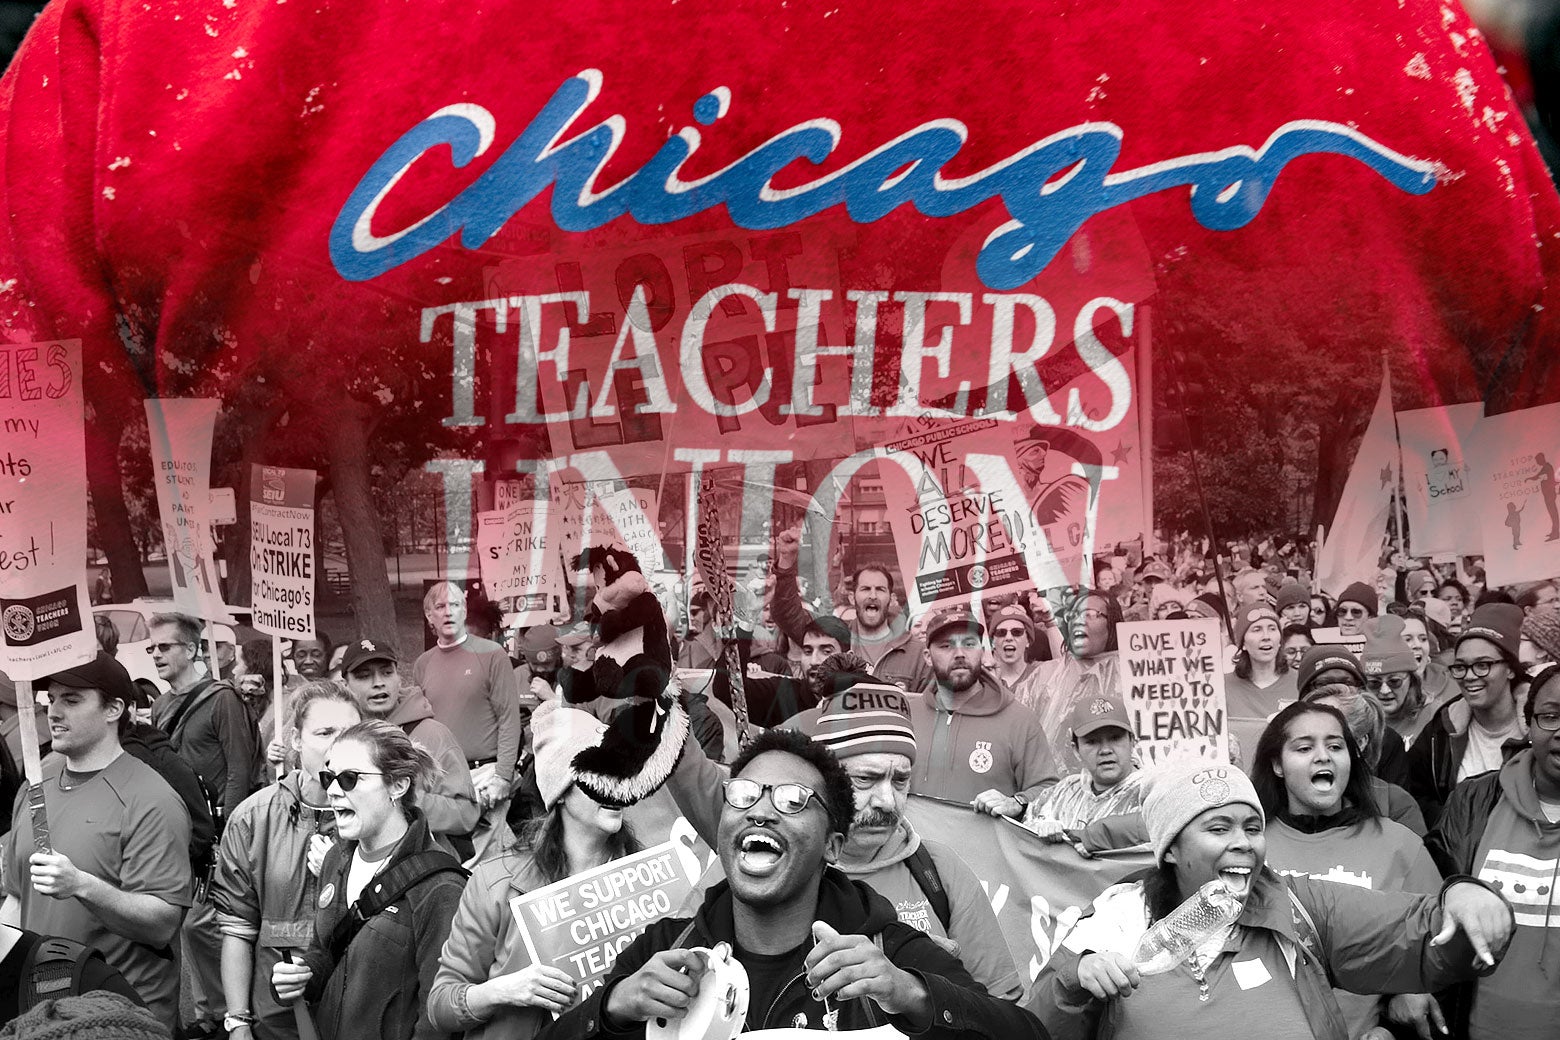 Striking Chicago school teachers marching through the city.